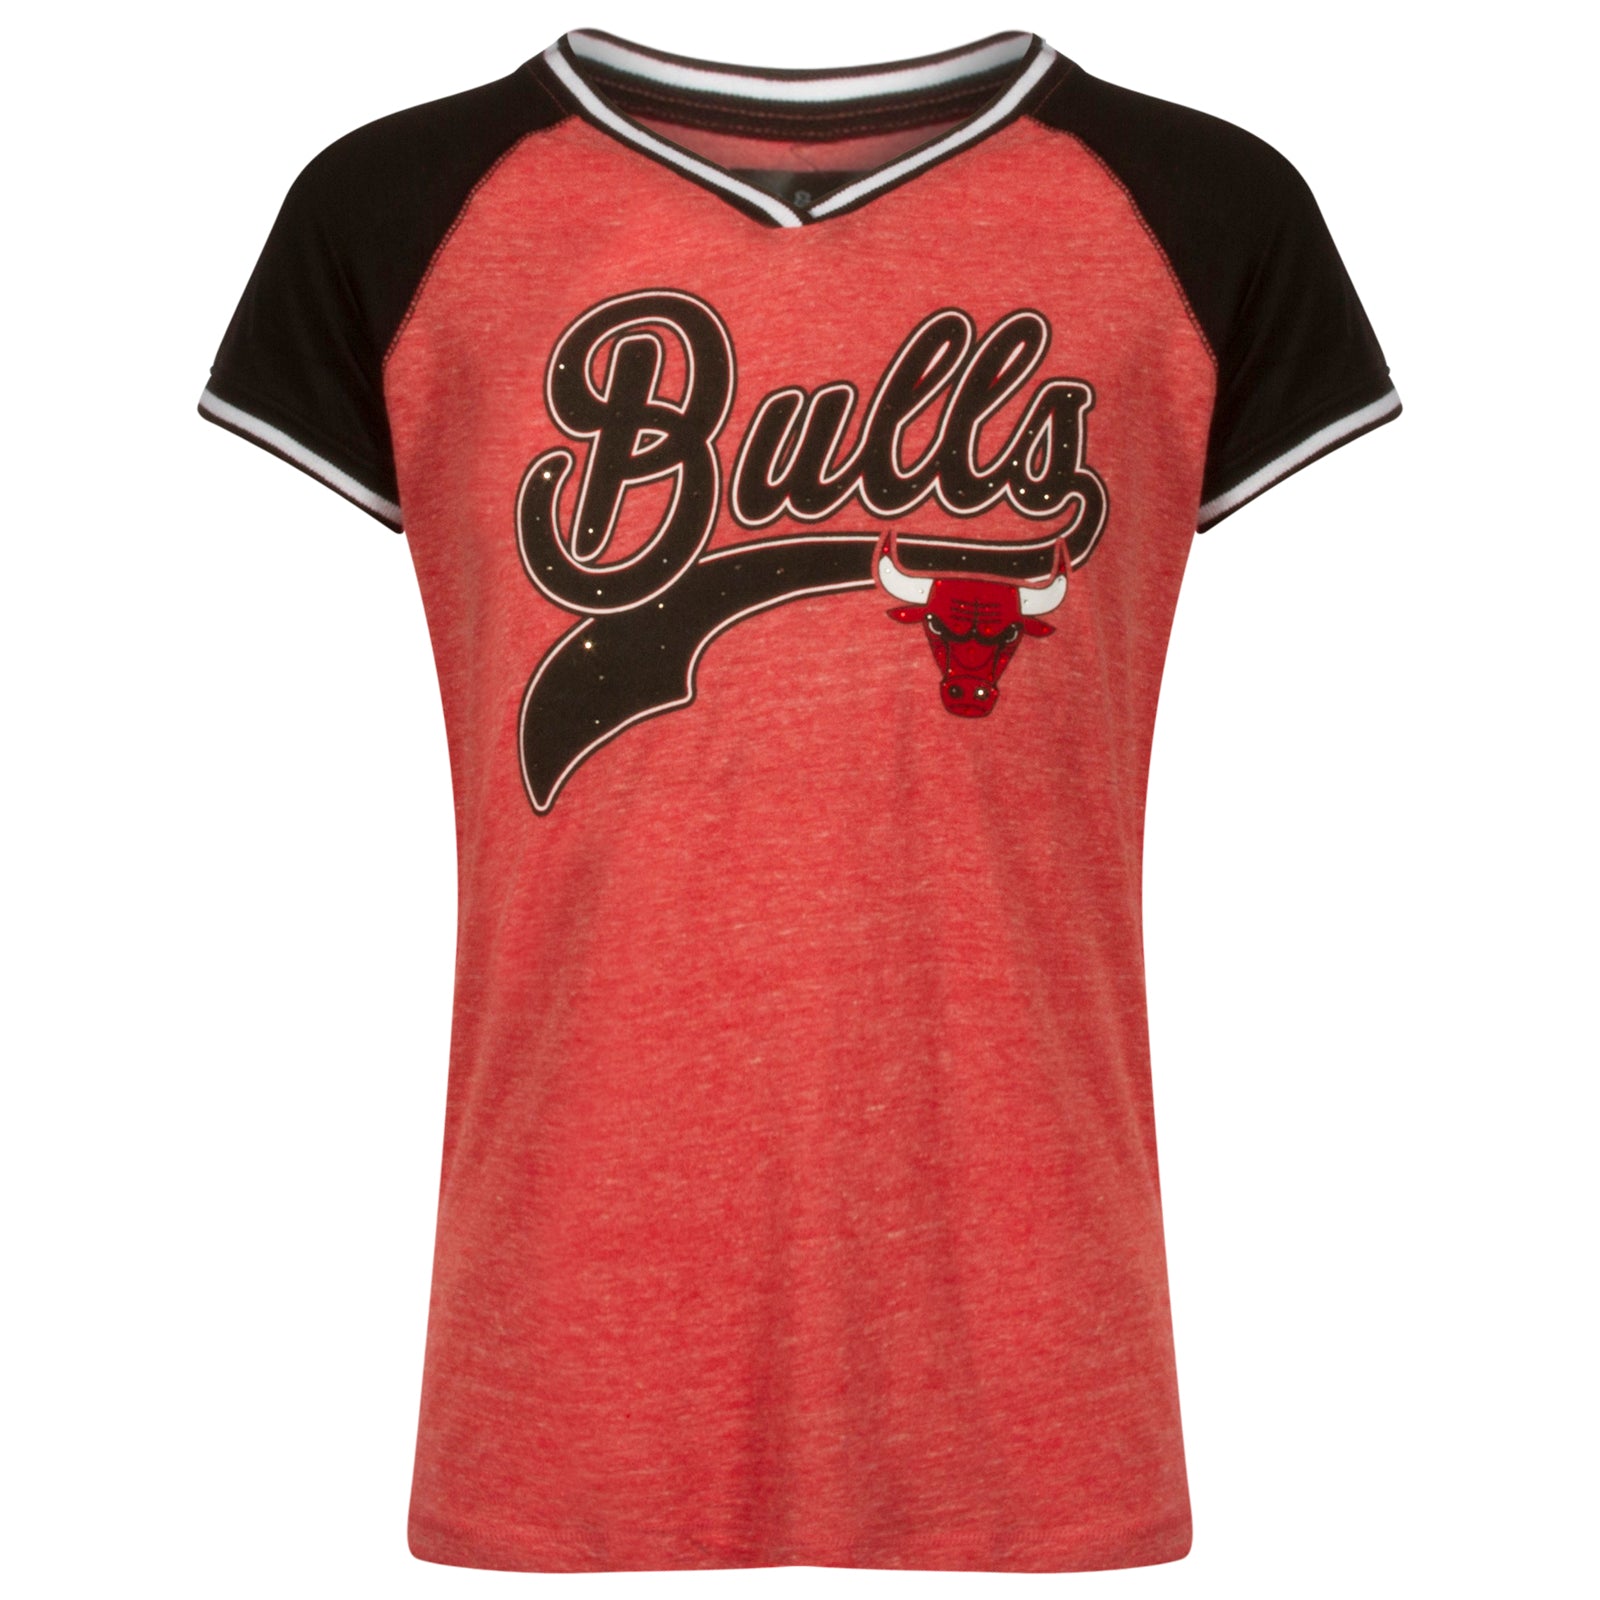 Chicago Bulls Women's Apparel, Bulls Ladies Jerseys, Gifts for her